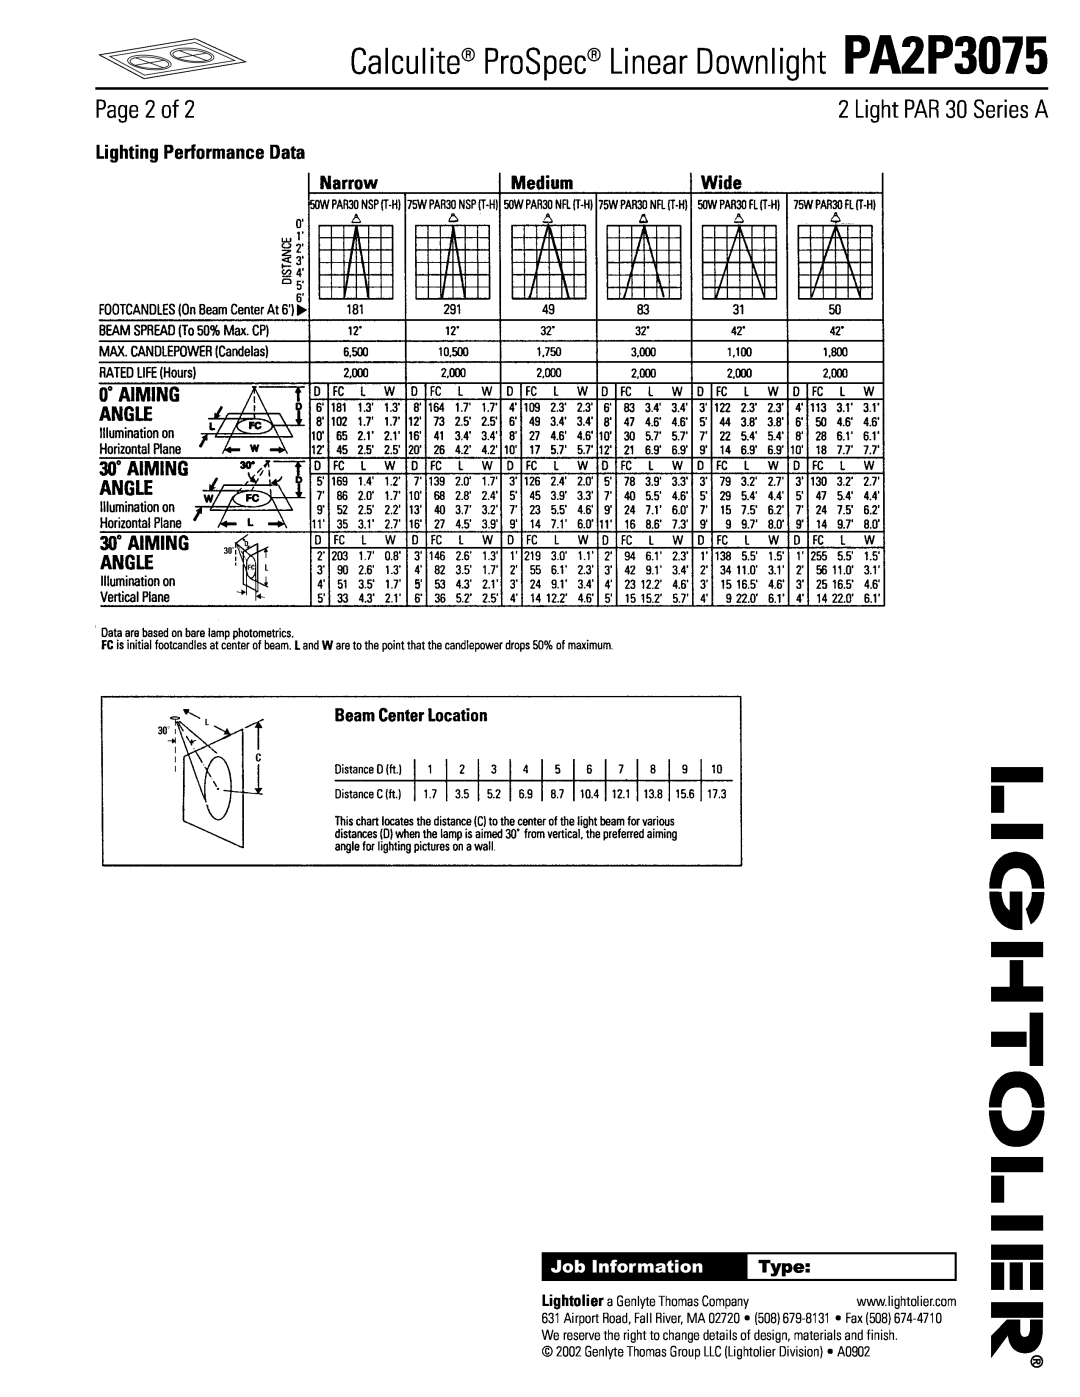 Lightolier Page 2 of, Lighting Performance Data, Calculite ProSpec Linear Downlight PA2P3075, Light PAR 30 Series A 